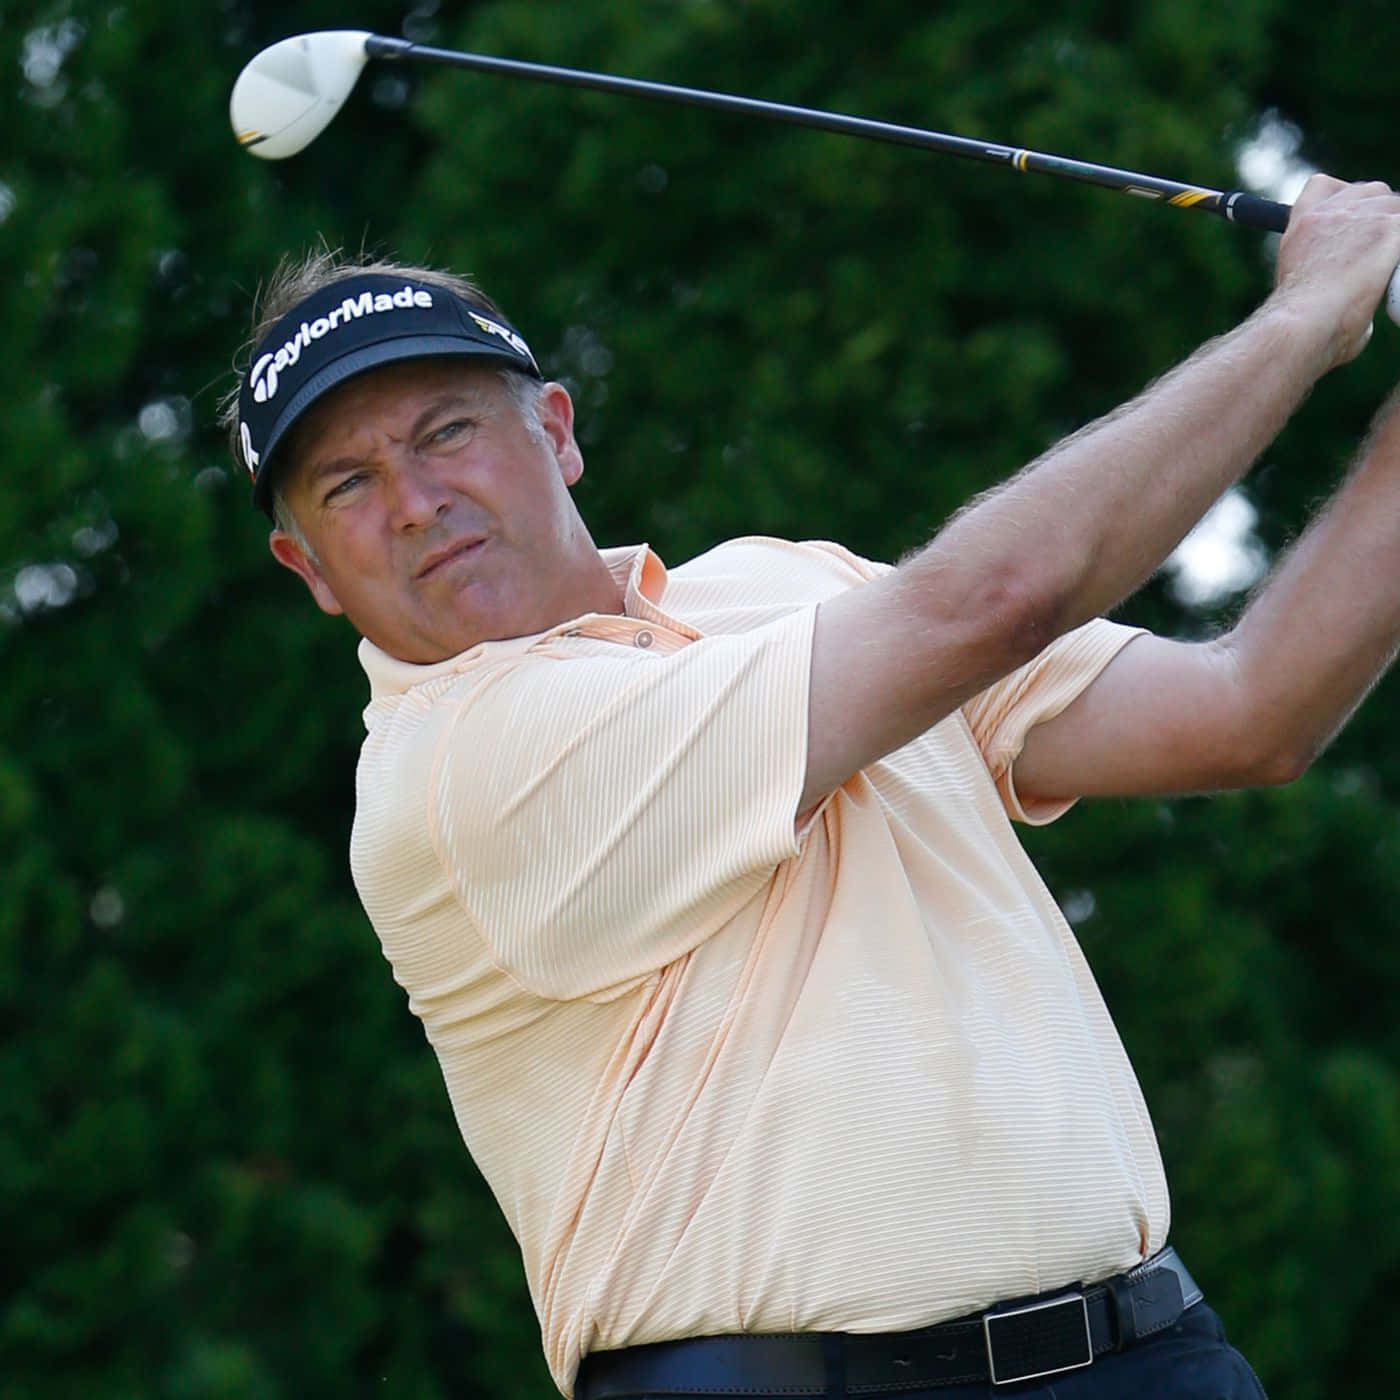 Professional golfer Ken Duke hits a strong swing on the fairway Wallpaper